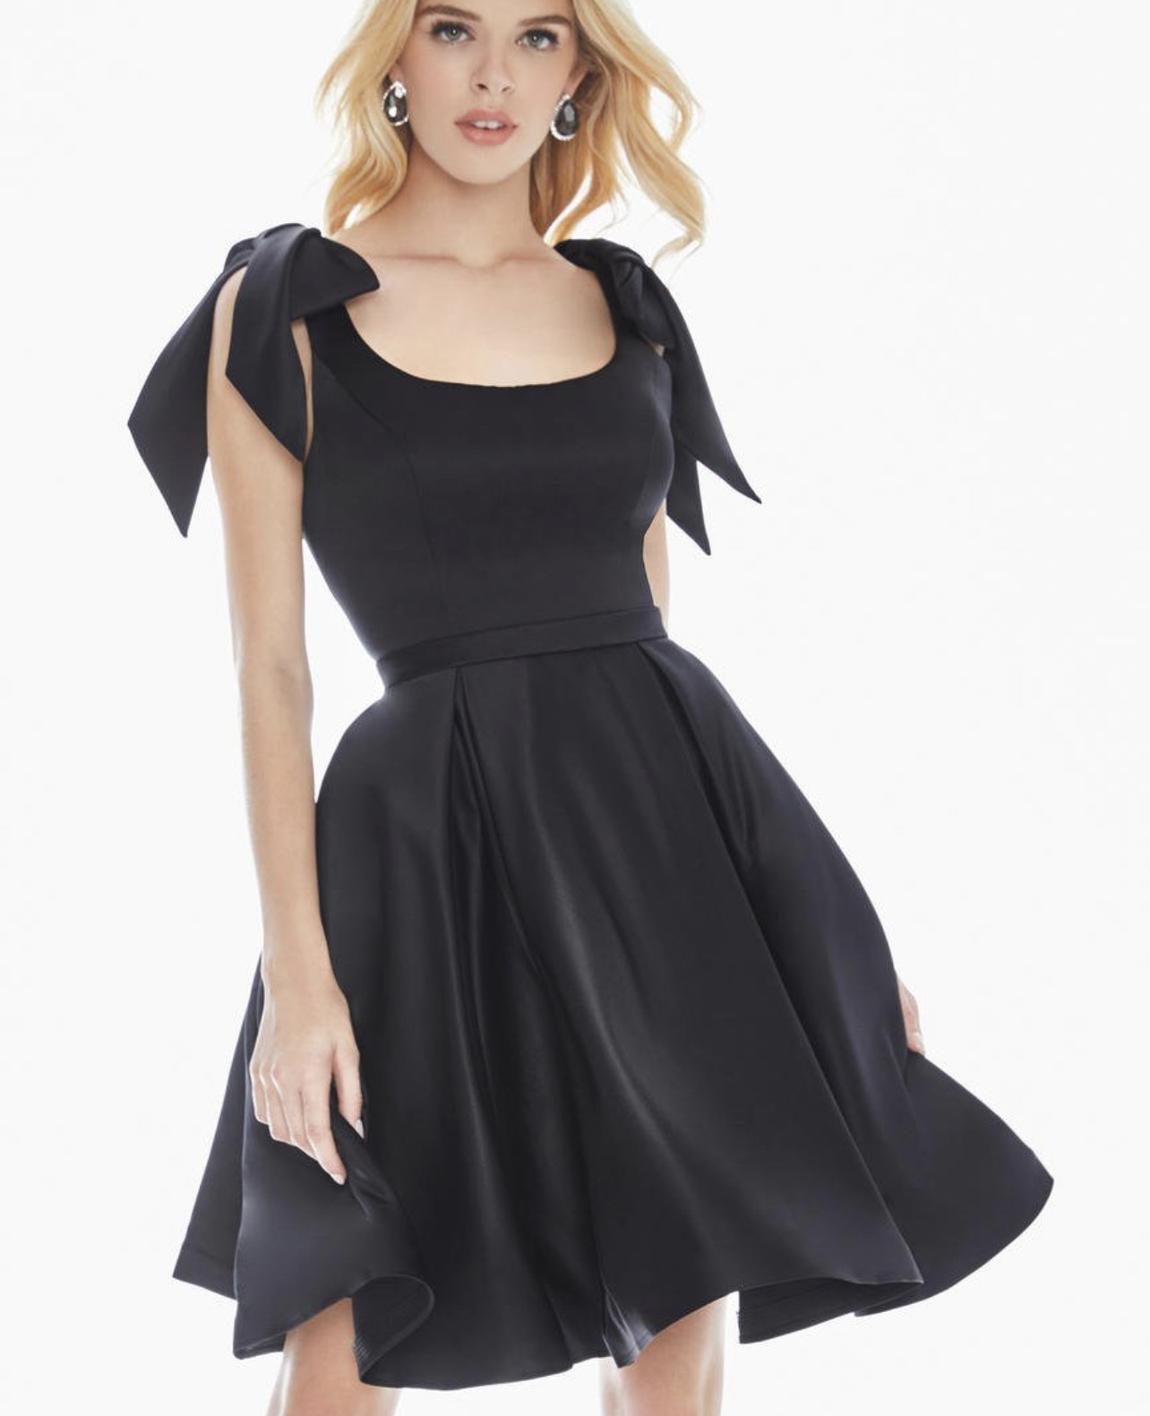 Ashley Lauren Size 4 Black Cocktail Dress on Queenly